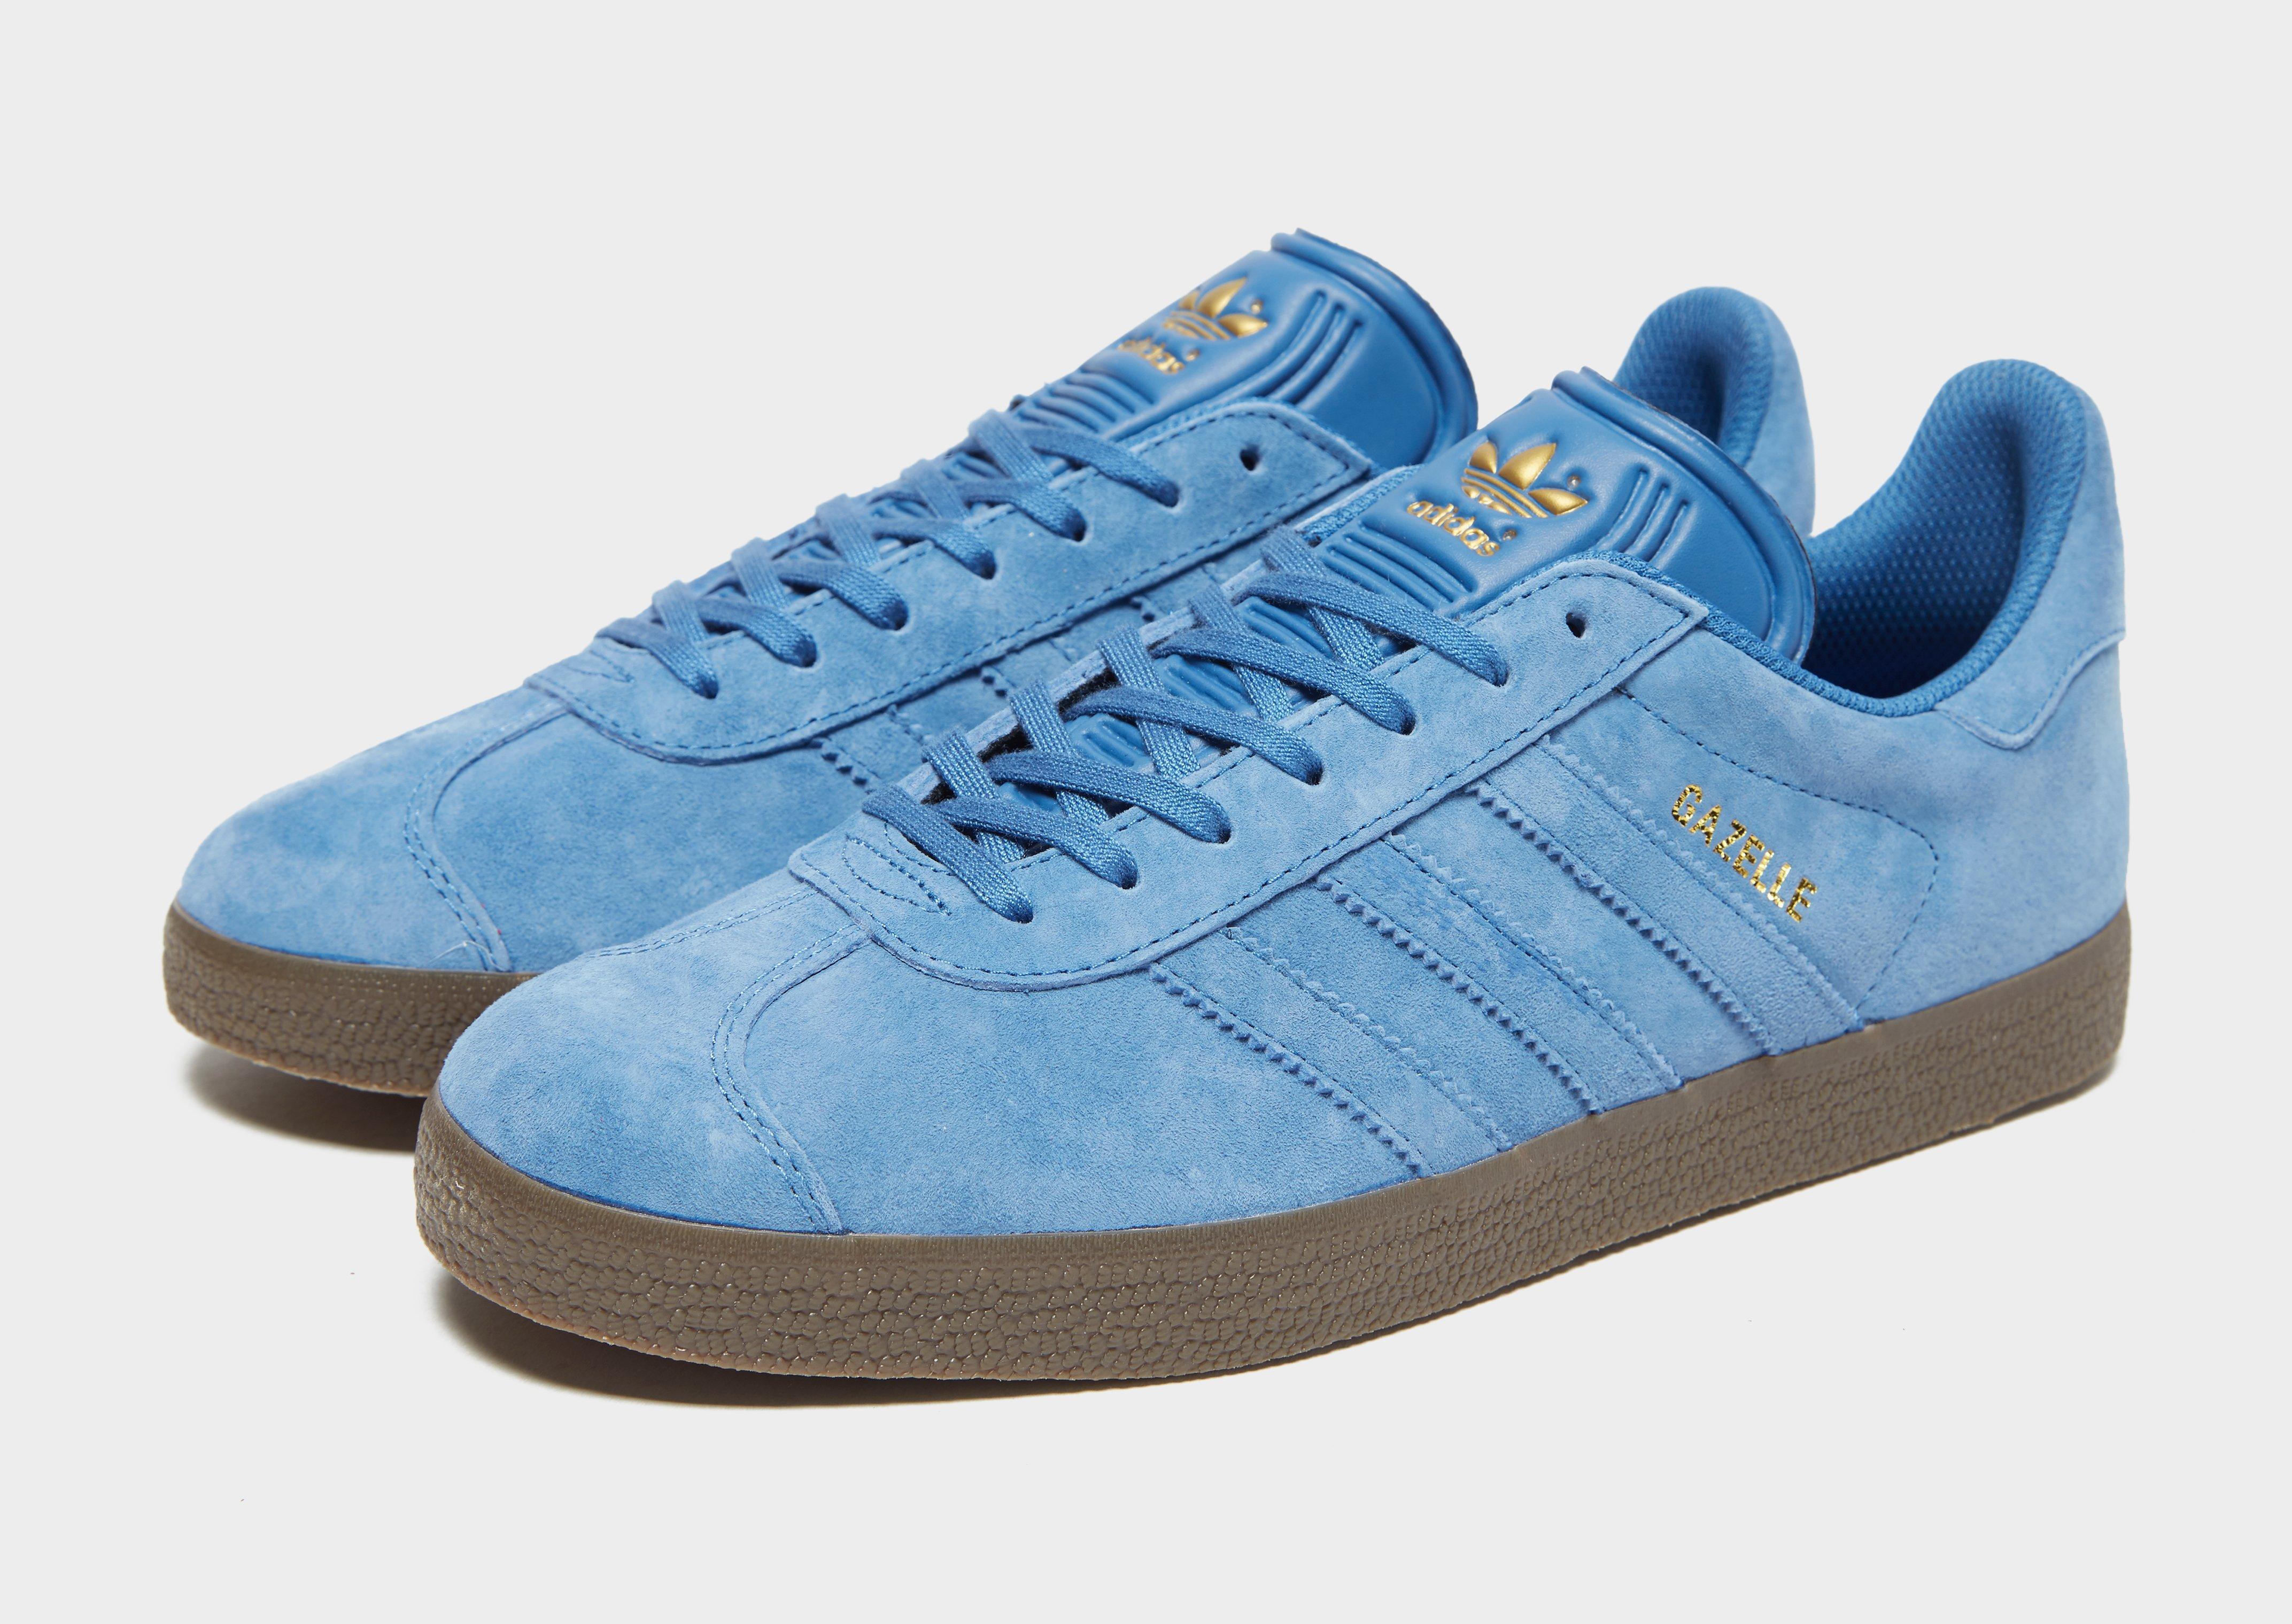 adidas Originals Leather Gazelle in Blue for Men - Lyst